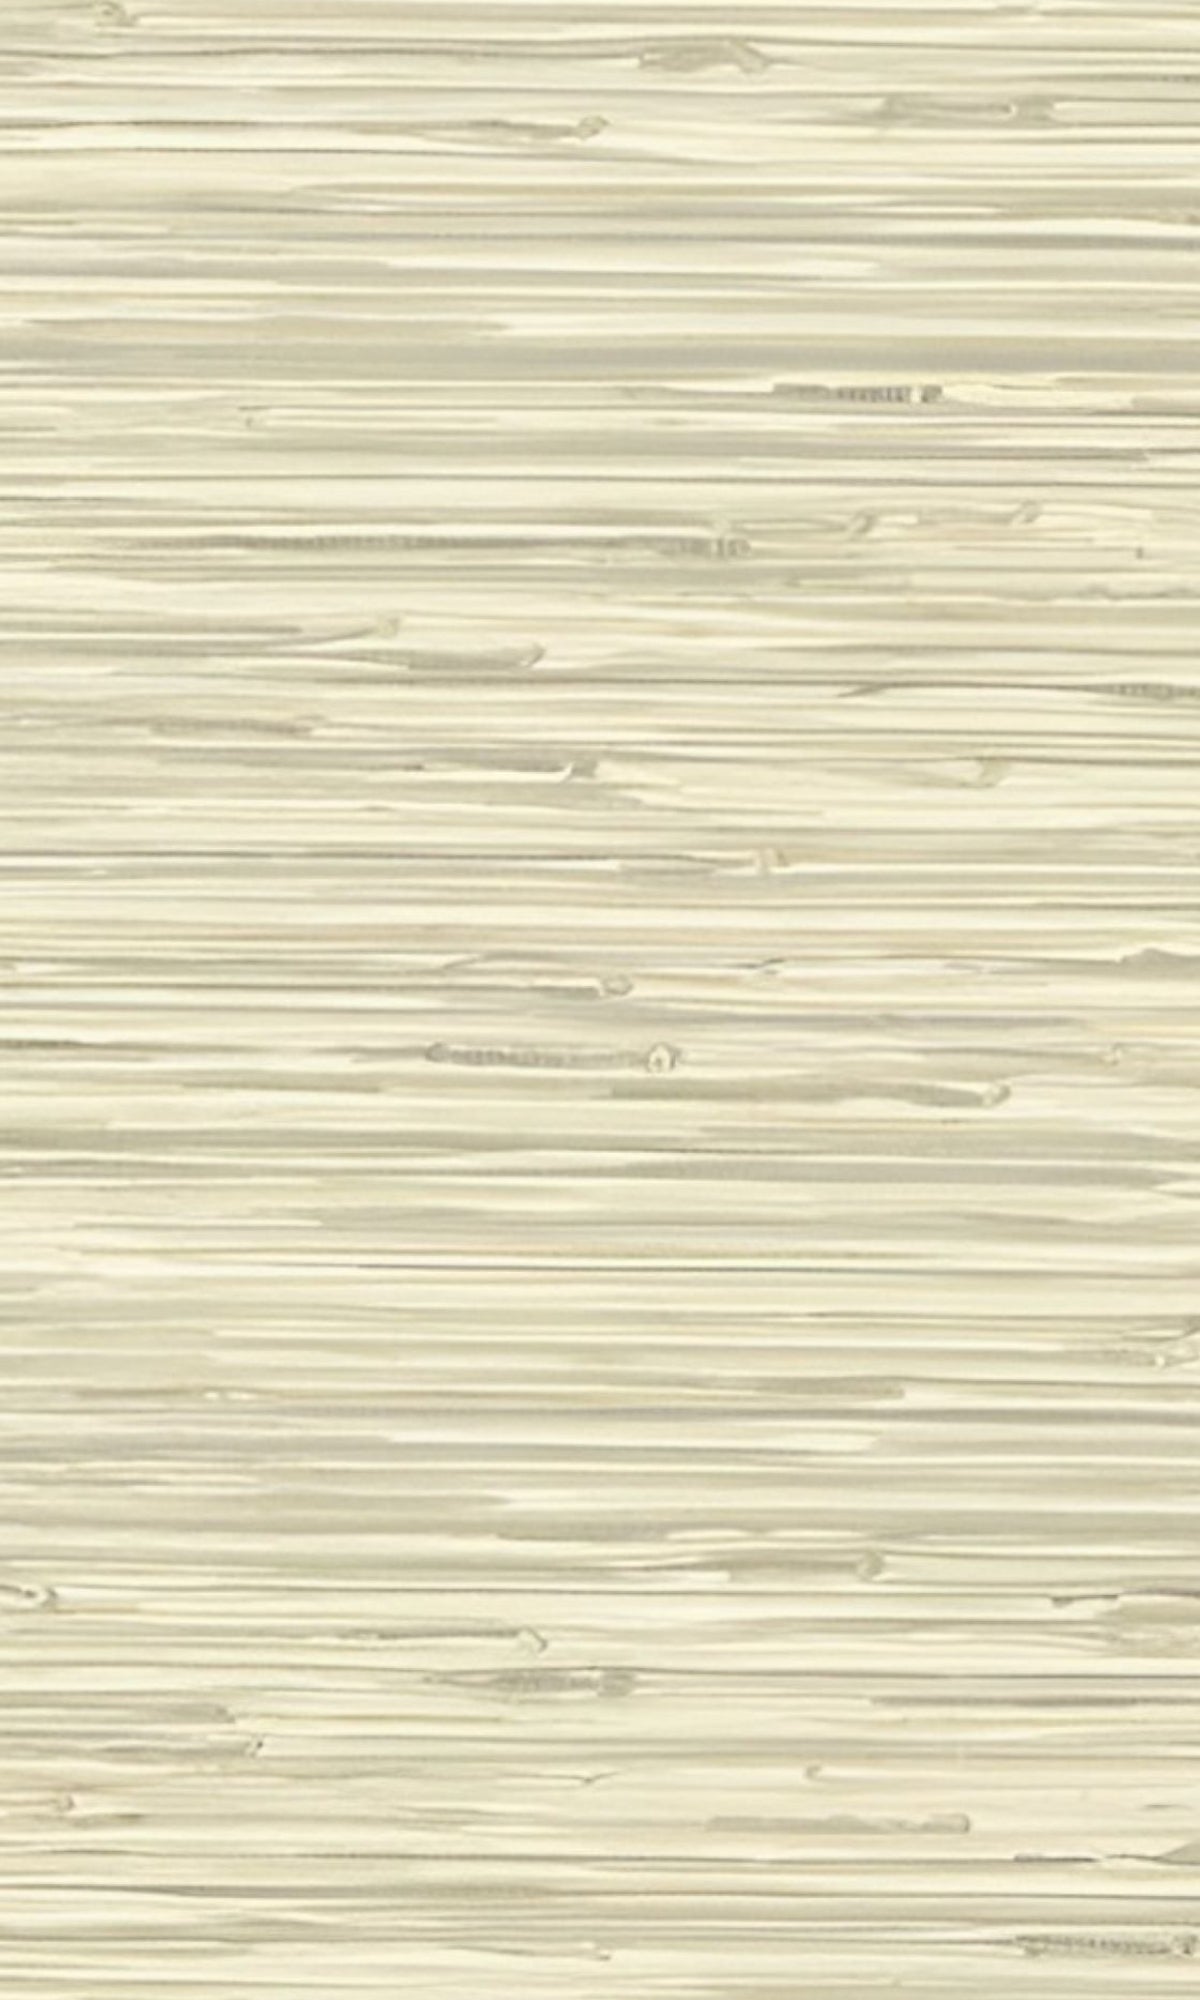 Willow Branch Grasscloth Inspired Vinyl Commercial Wallpaper C7620